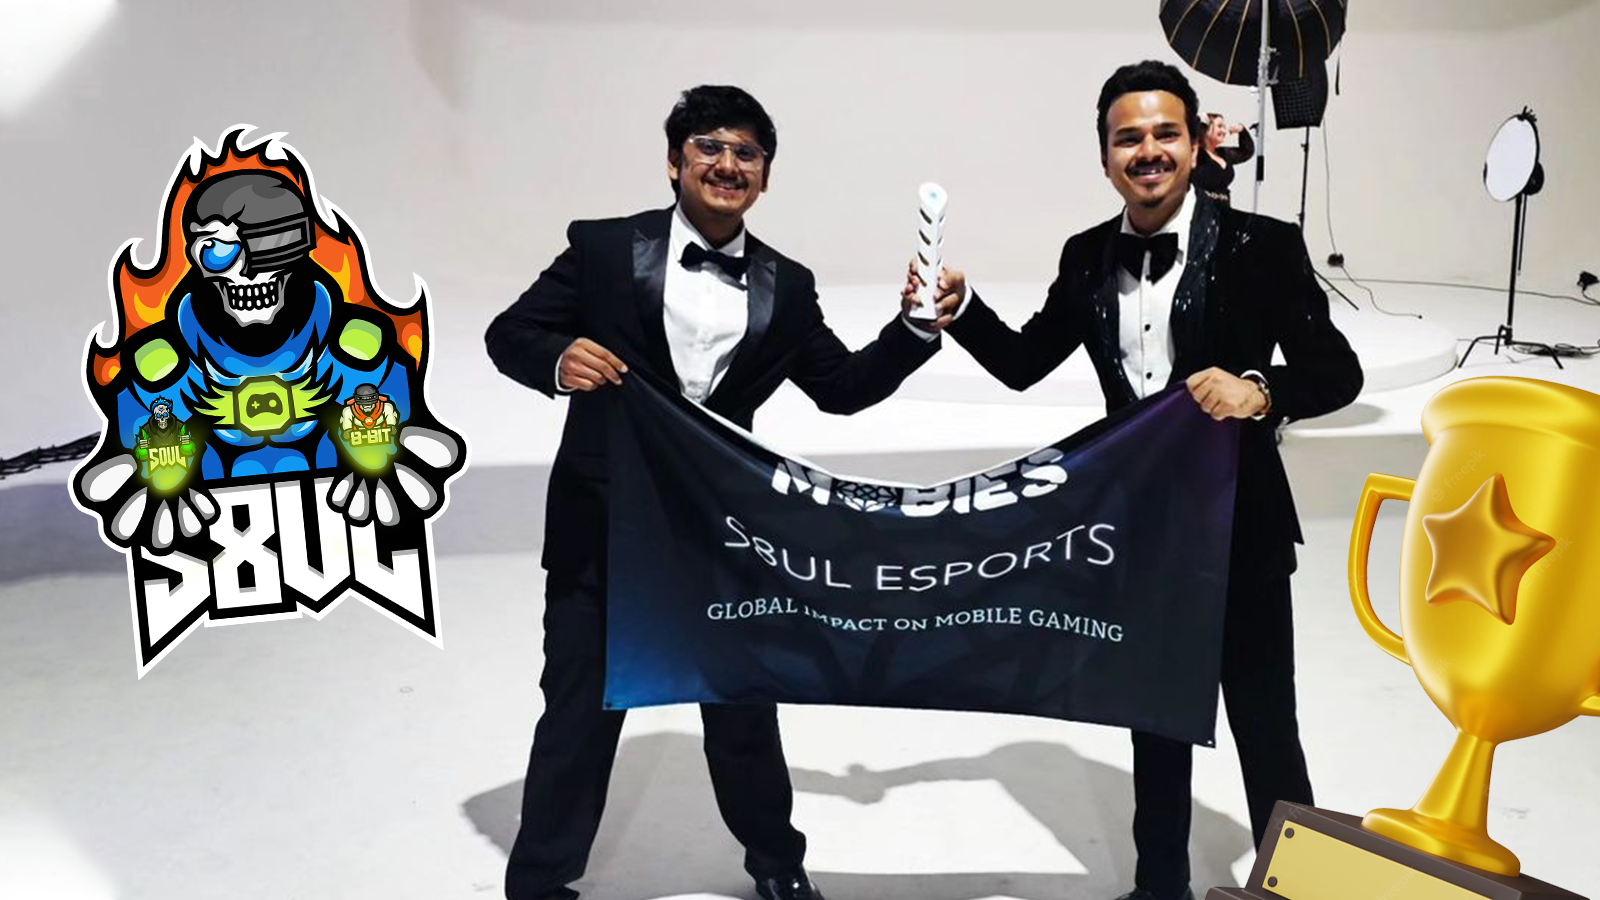 S8UL Esports Scripts History Again: Wins ‘Global Impact on Mobile Gaming’ Award